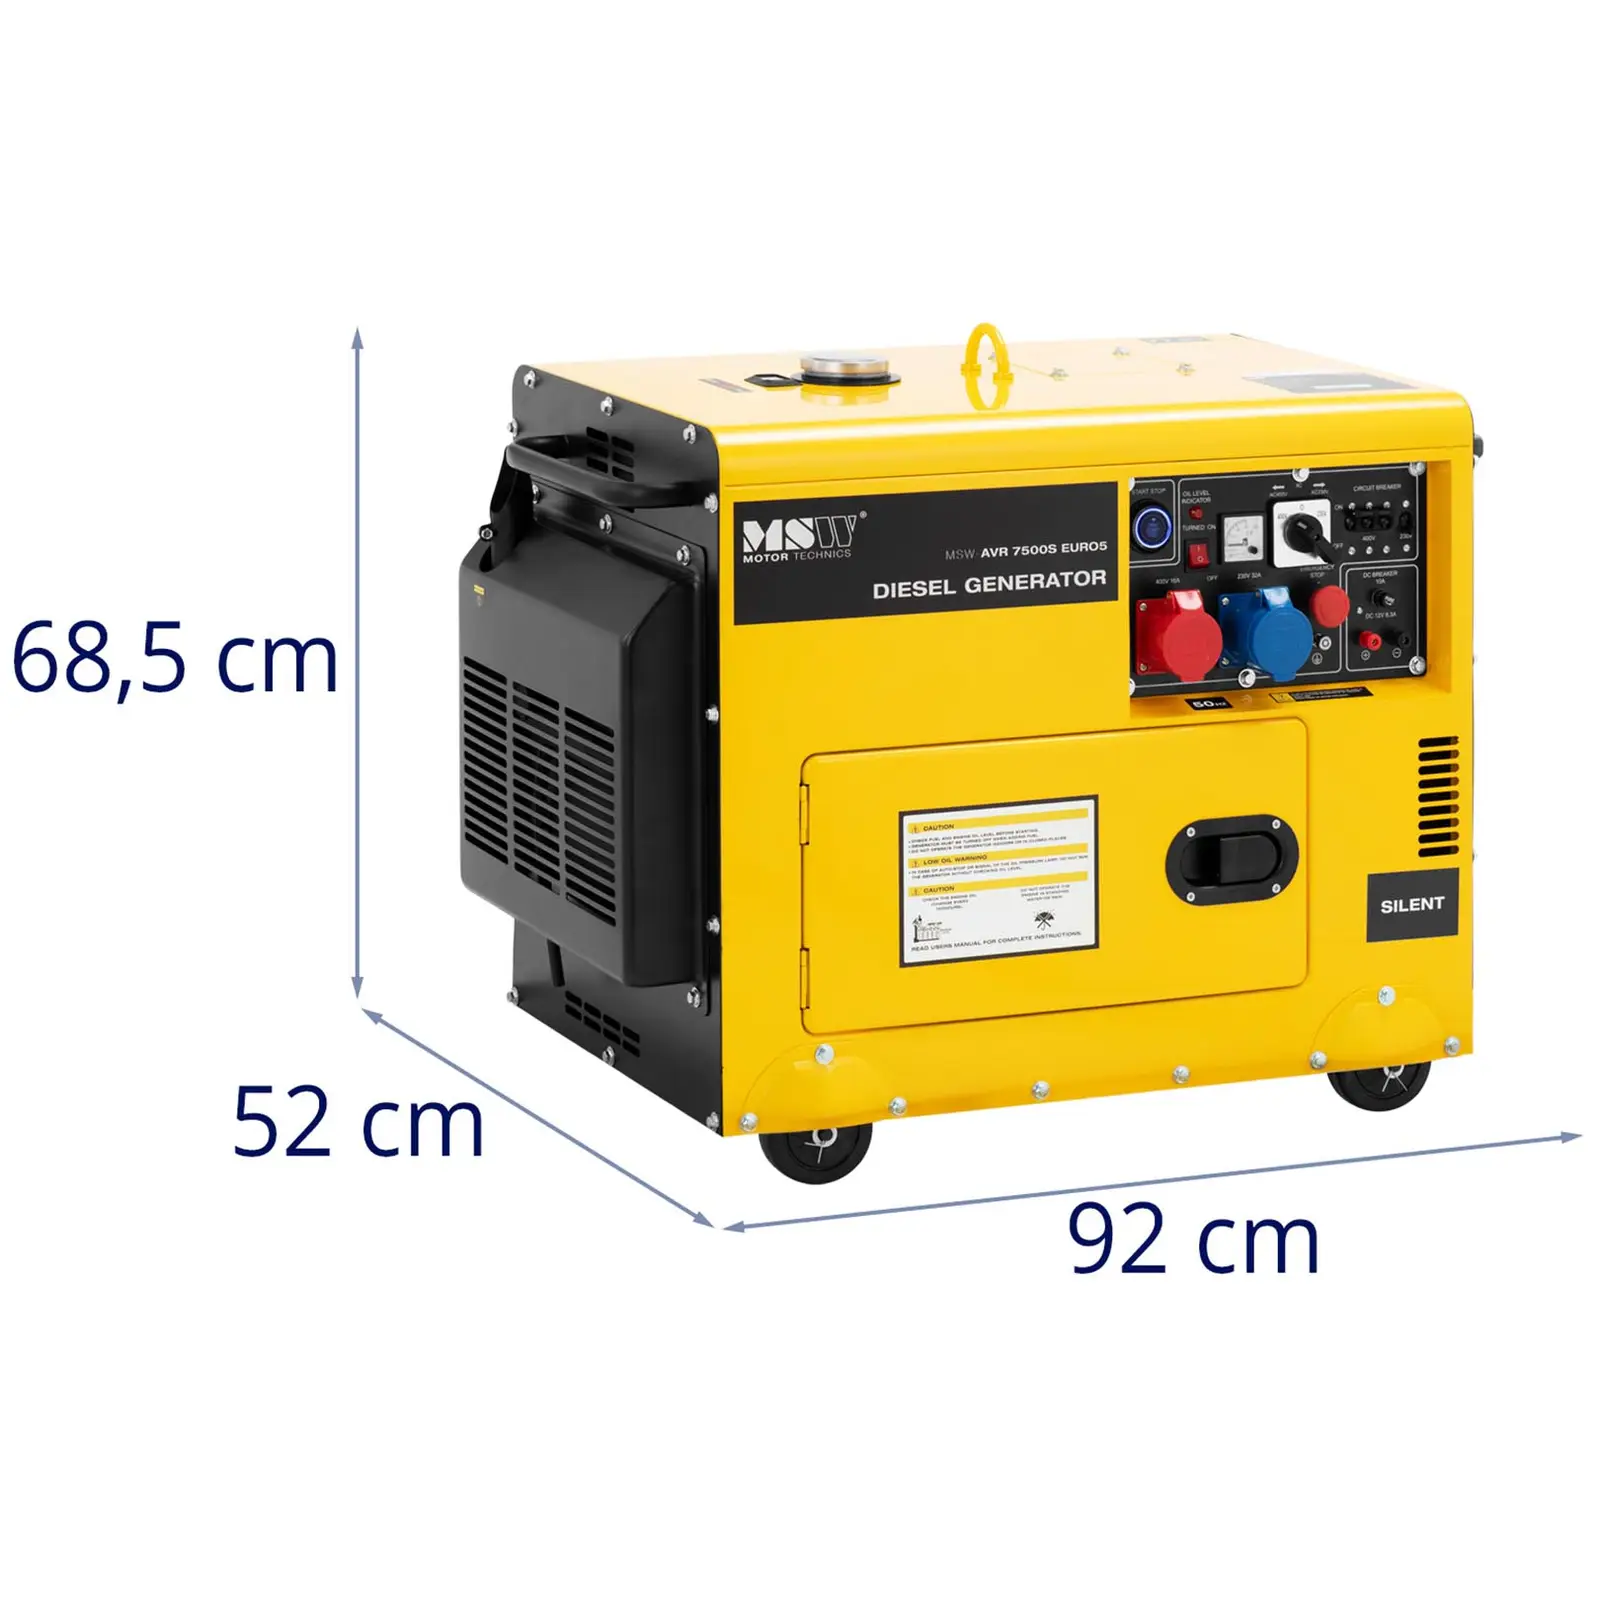 Notstromaggregat Diesel - 6370 / 7500 W - 16 L - 230/400 V - mobil - AVR - Euro 5